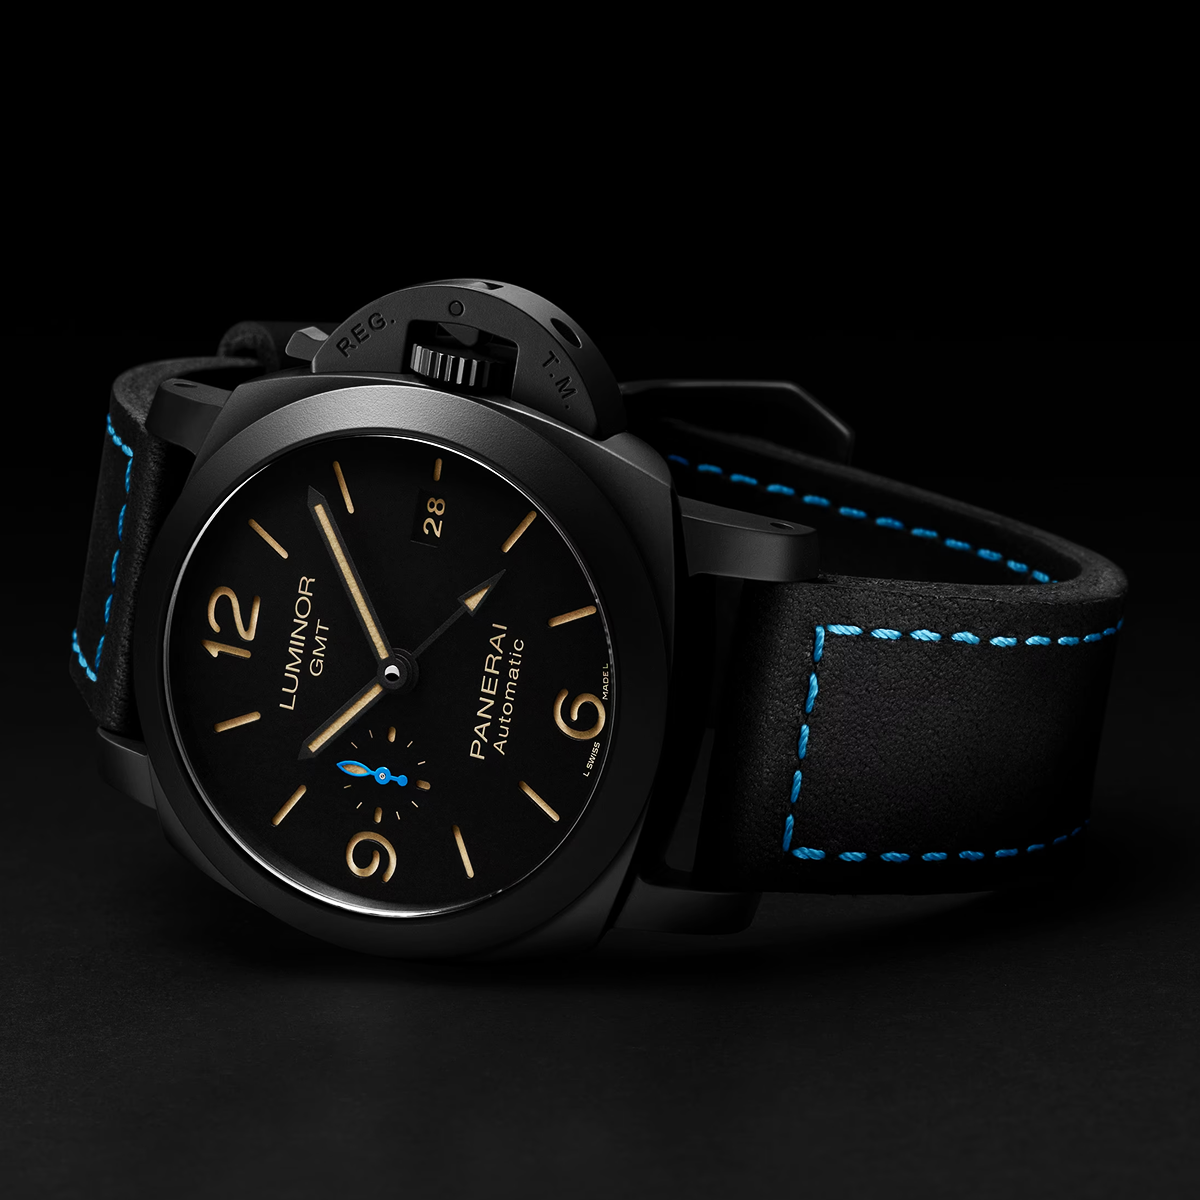 Luminor GMT 44mm Black Ceramic Men's Automatic Watch